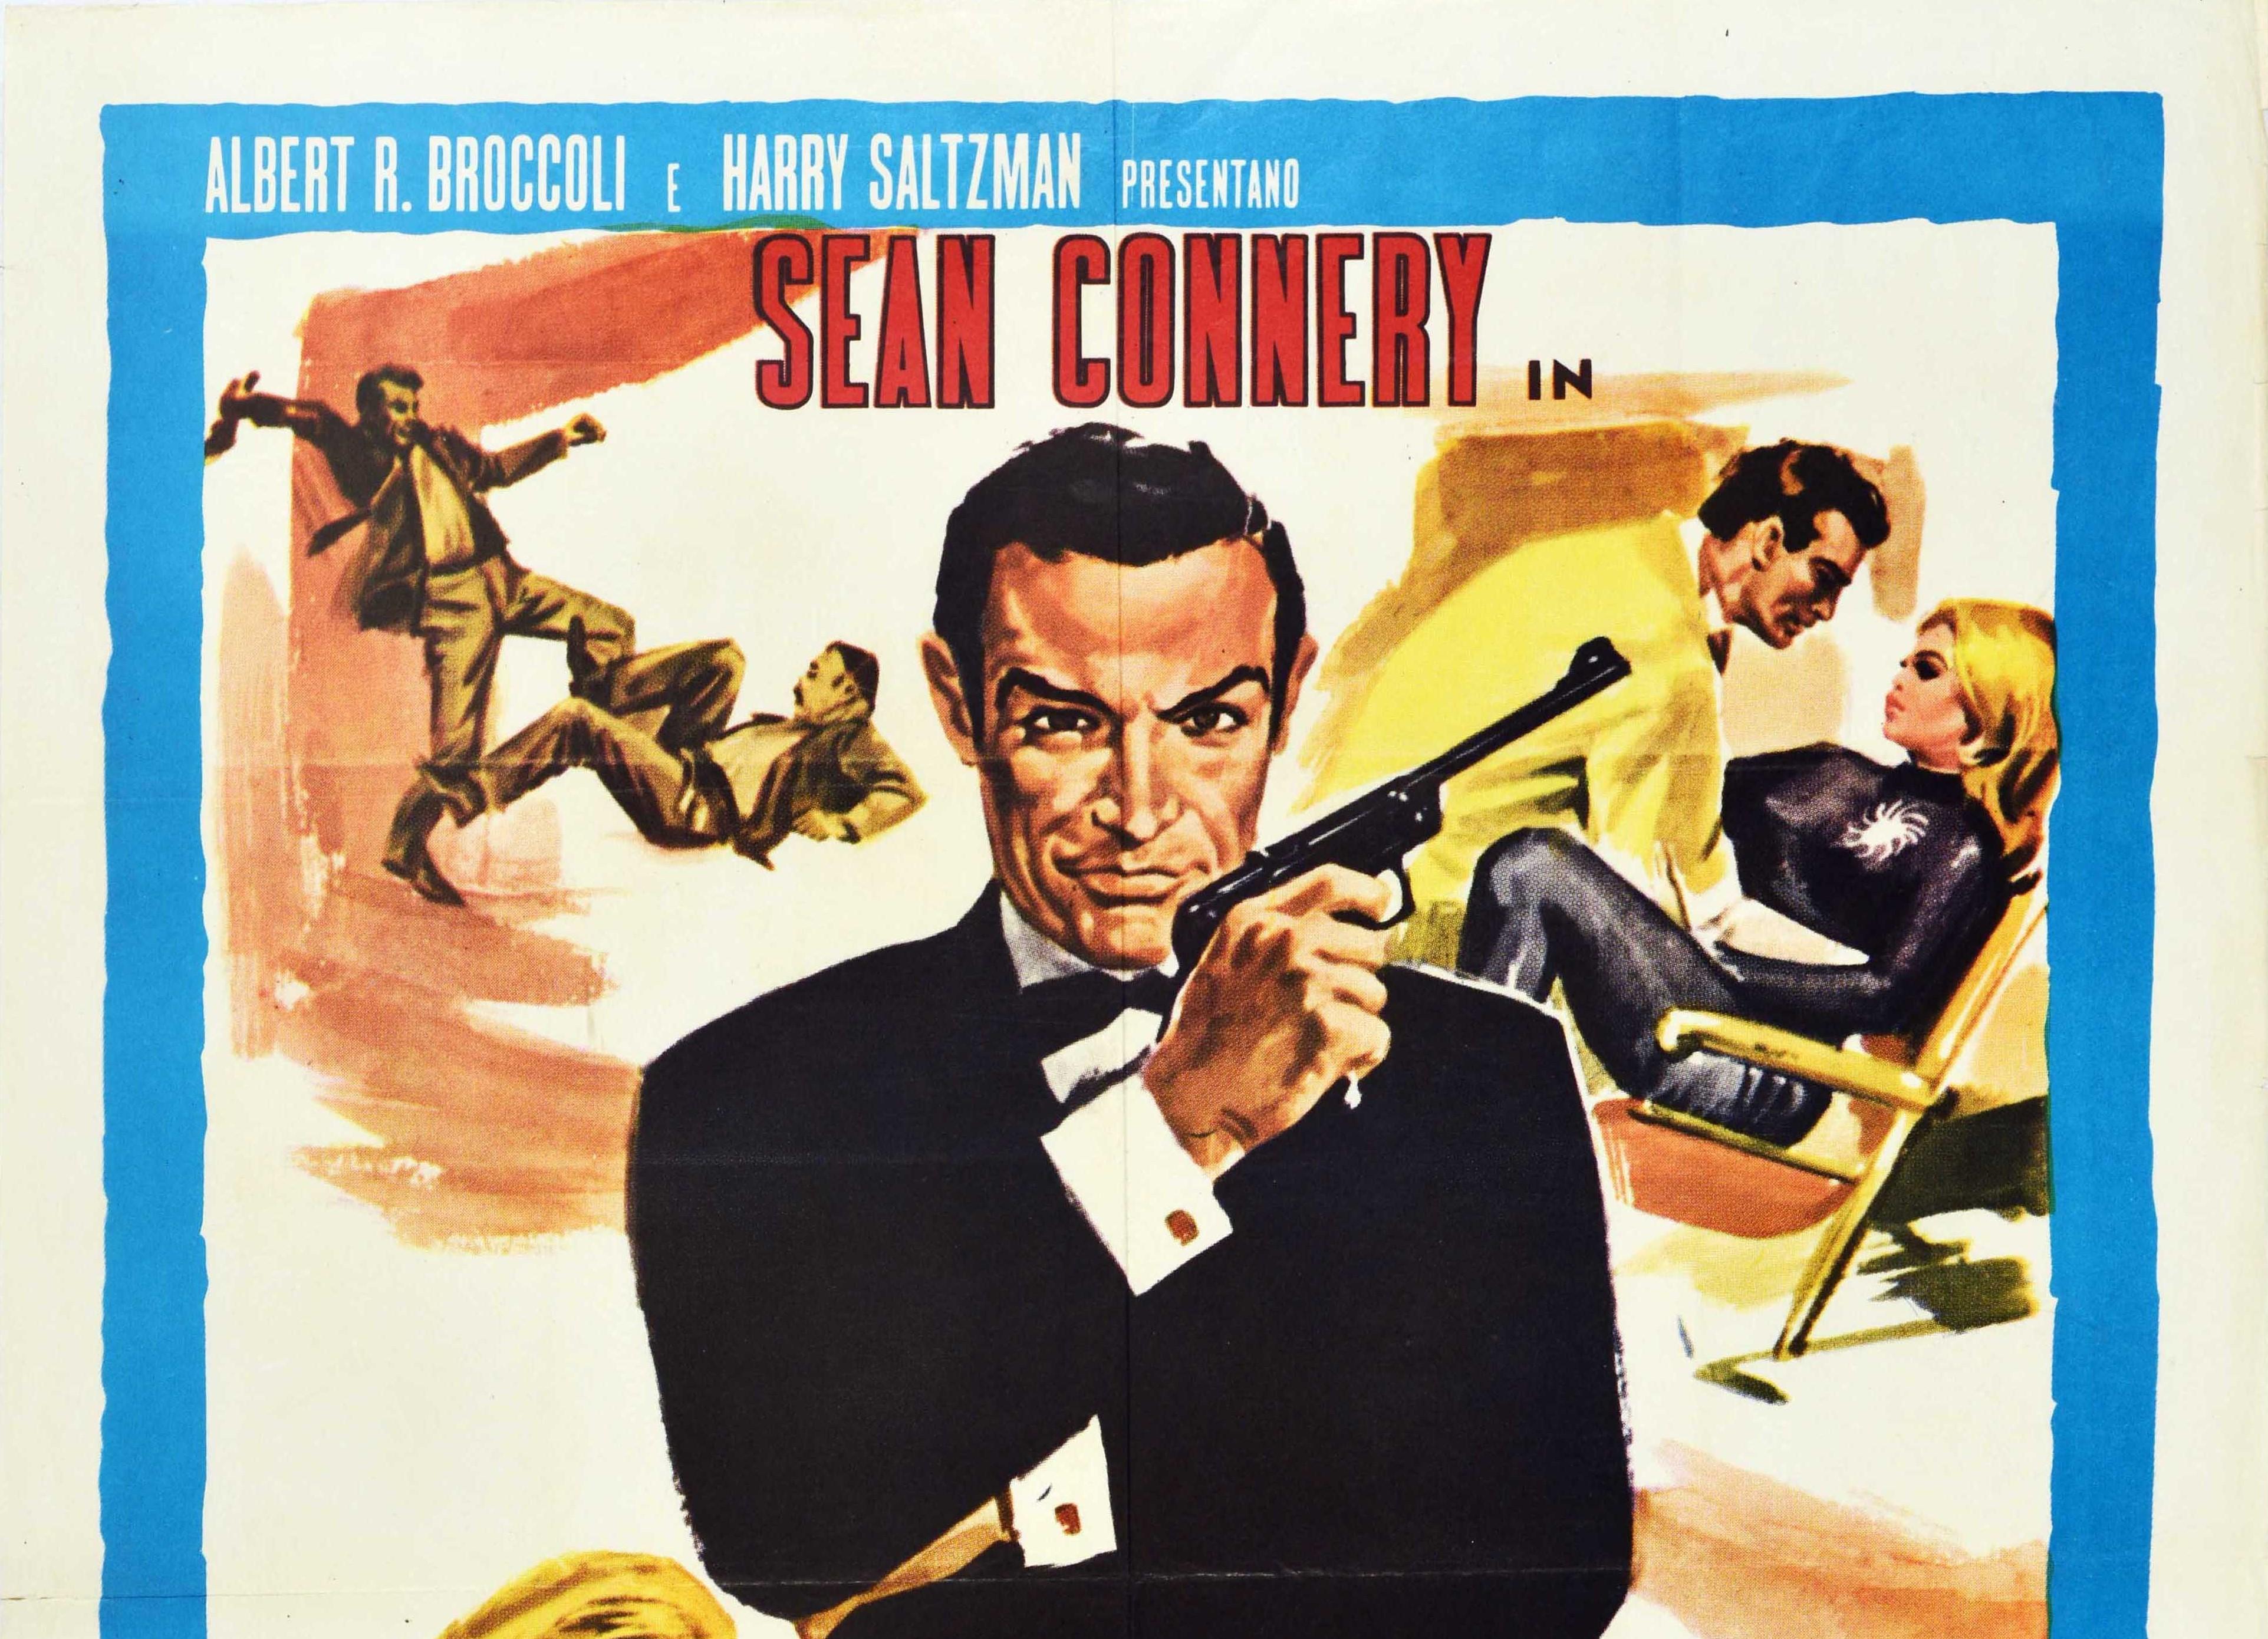 Original Vintage James Bond Film Poster Agente 007 Missione Goldfinger Rerelease - Print by Unknown